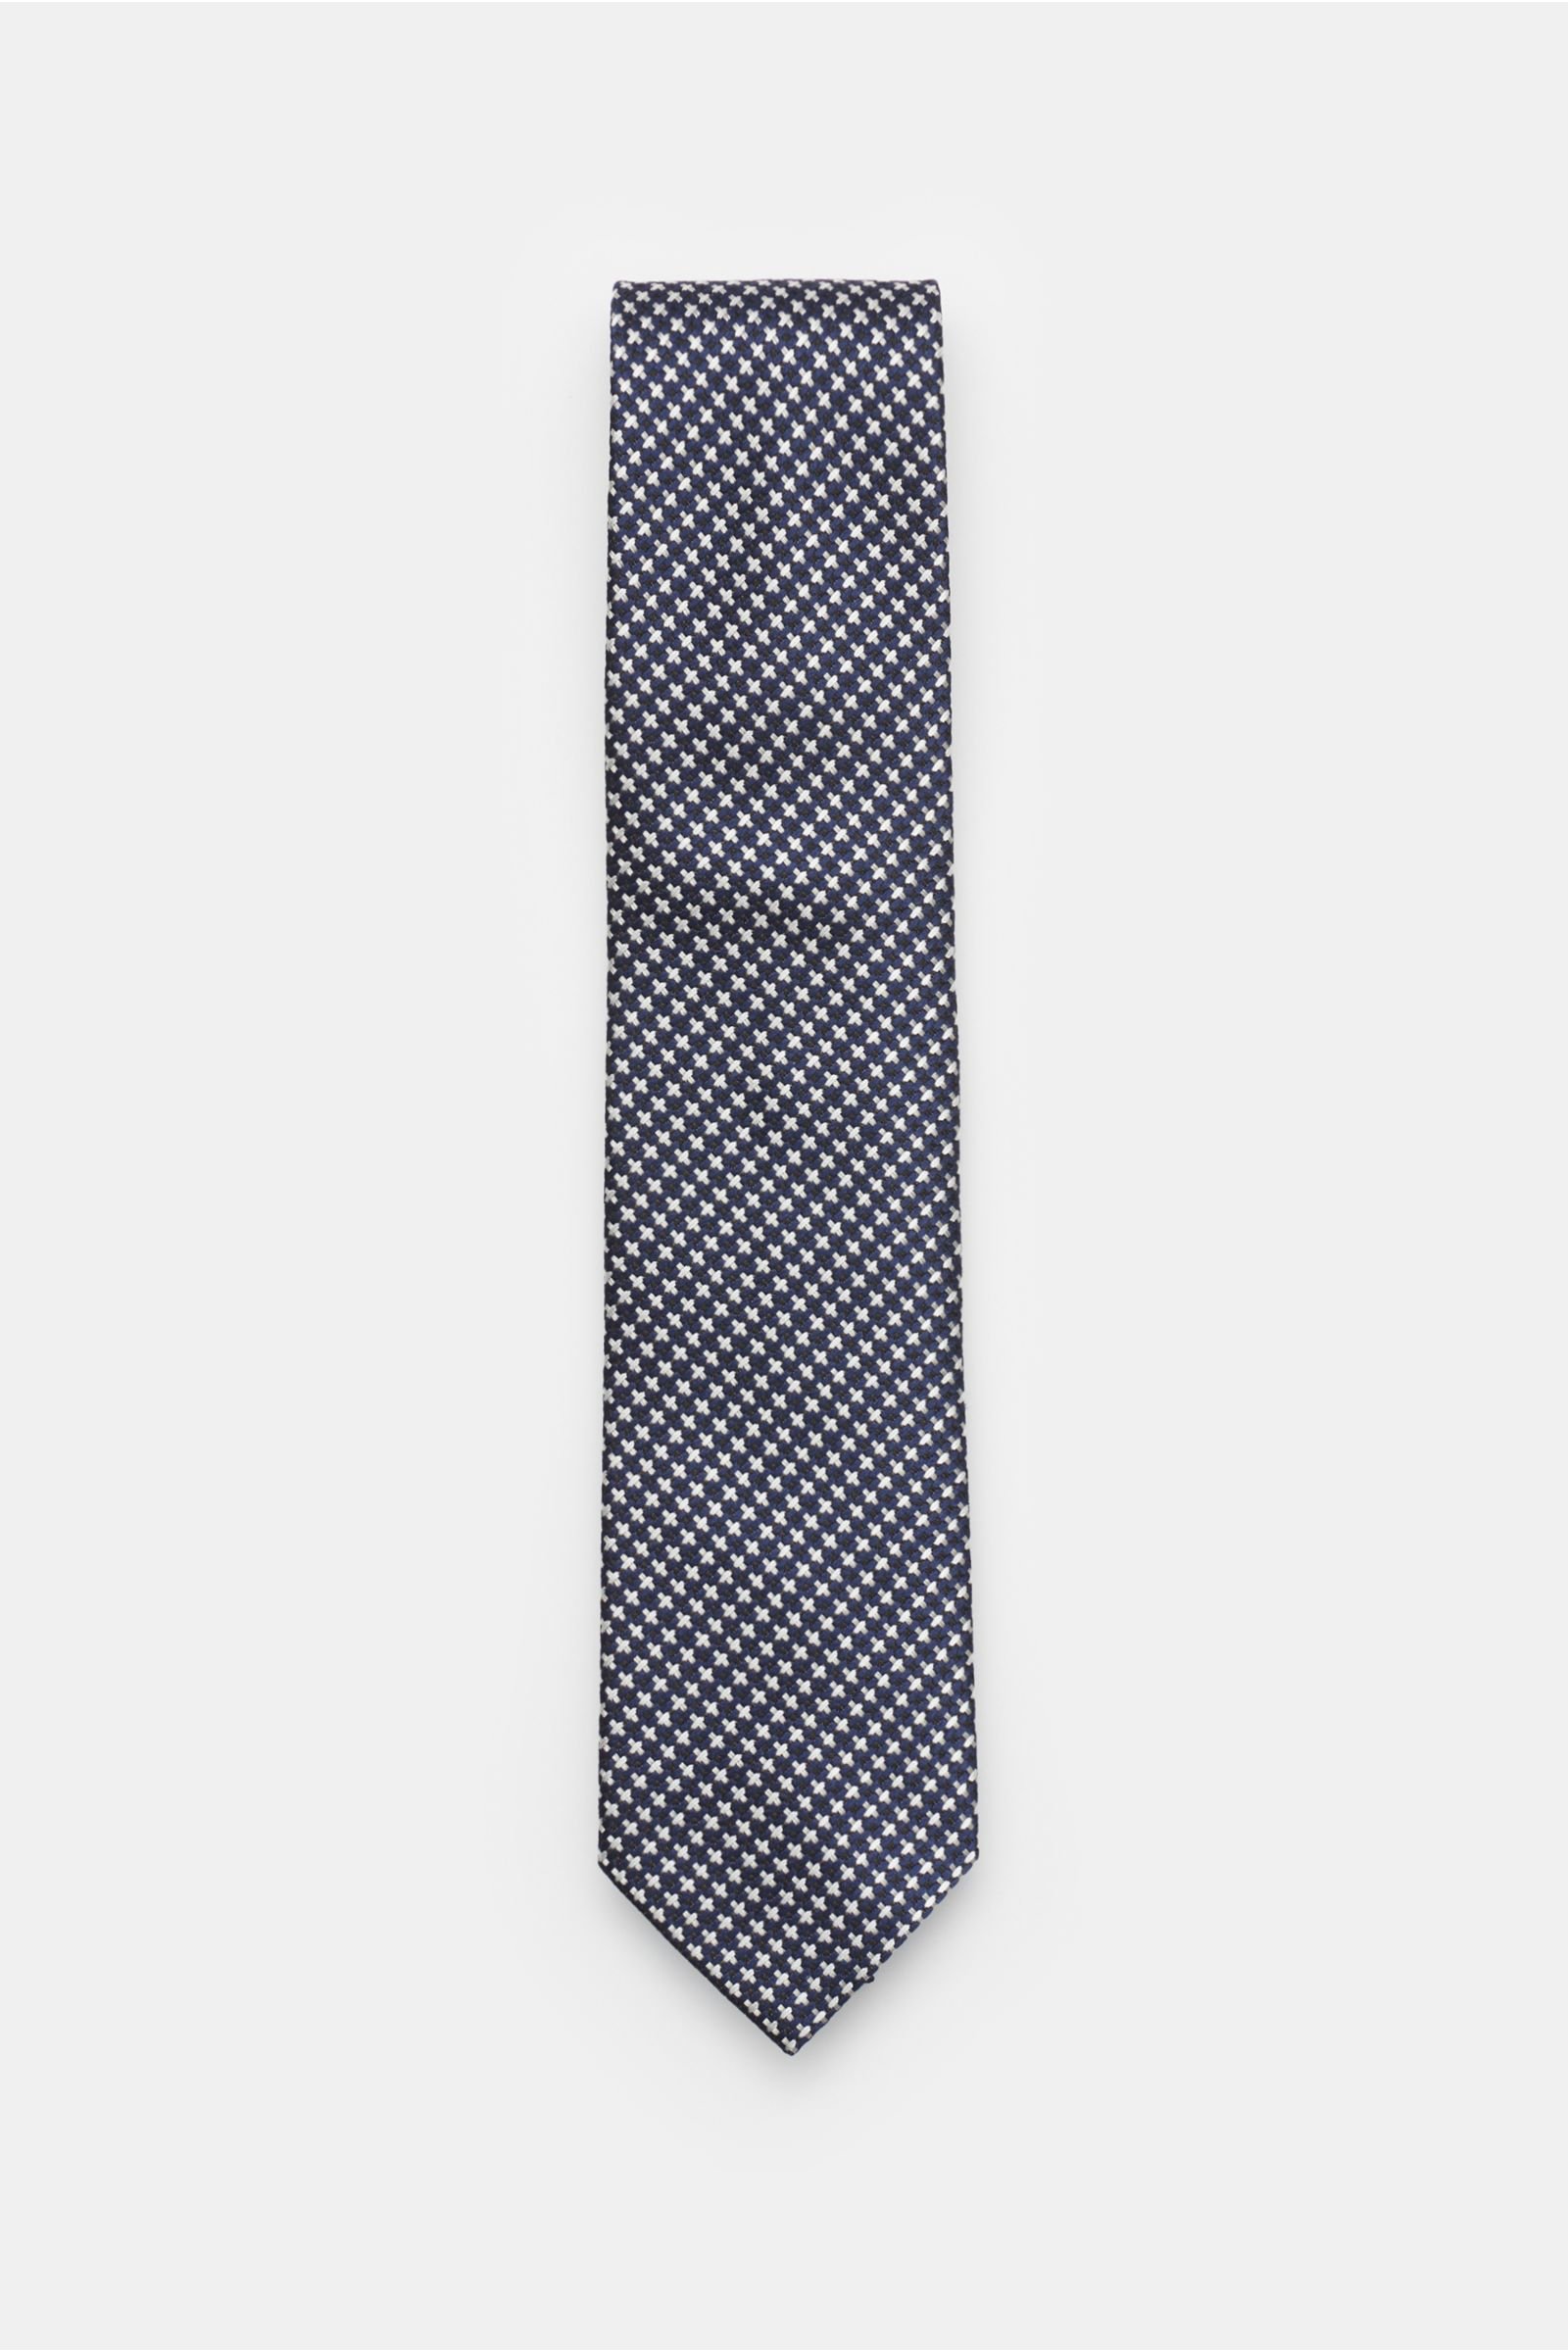 Silk tie navy/grey patterned